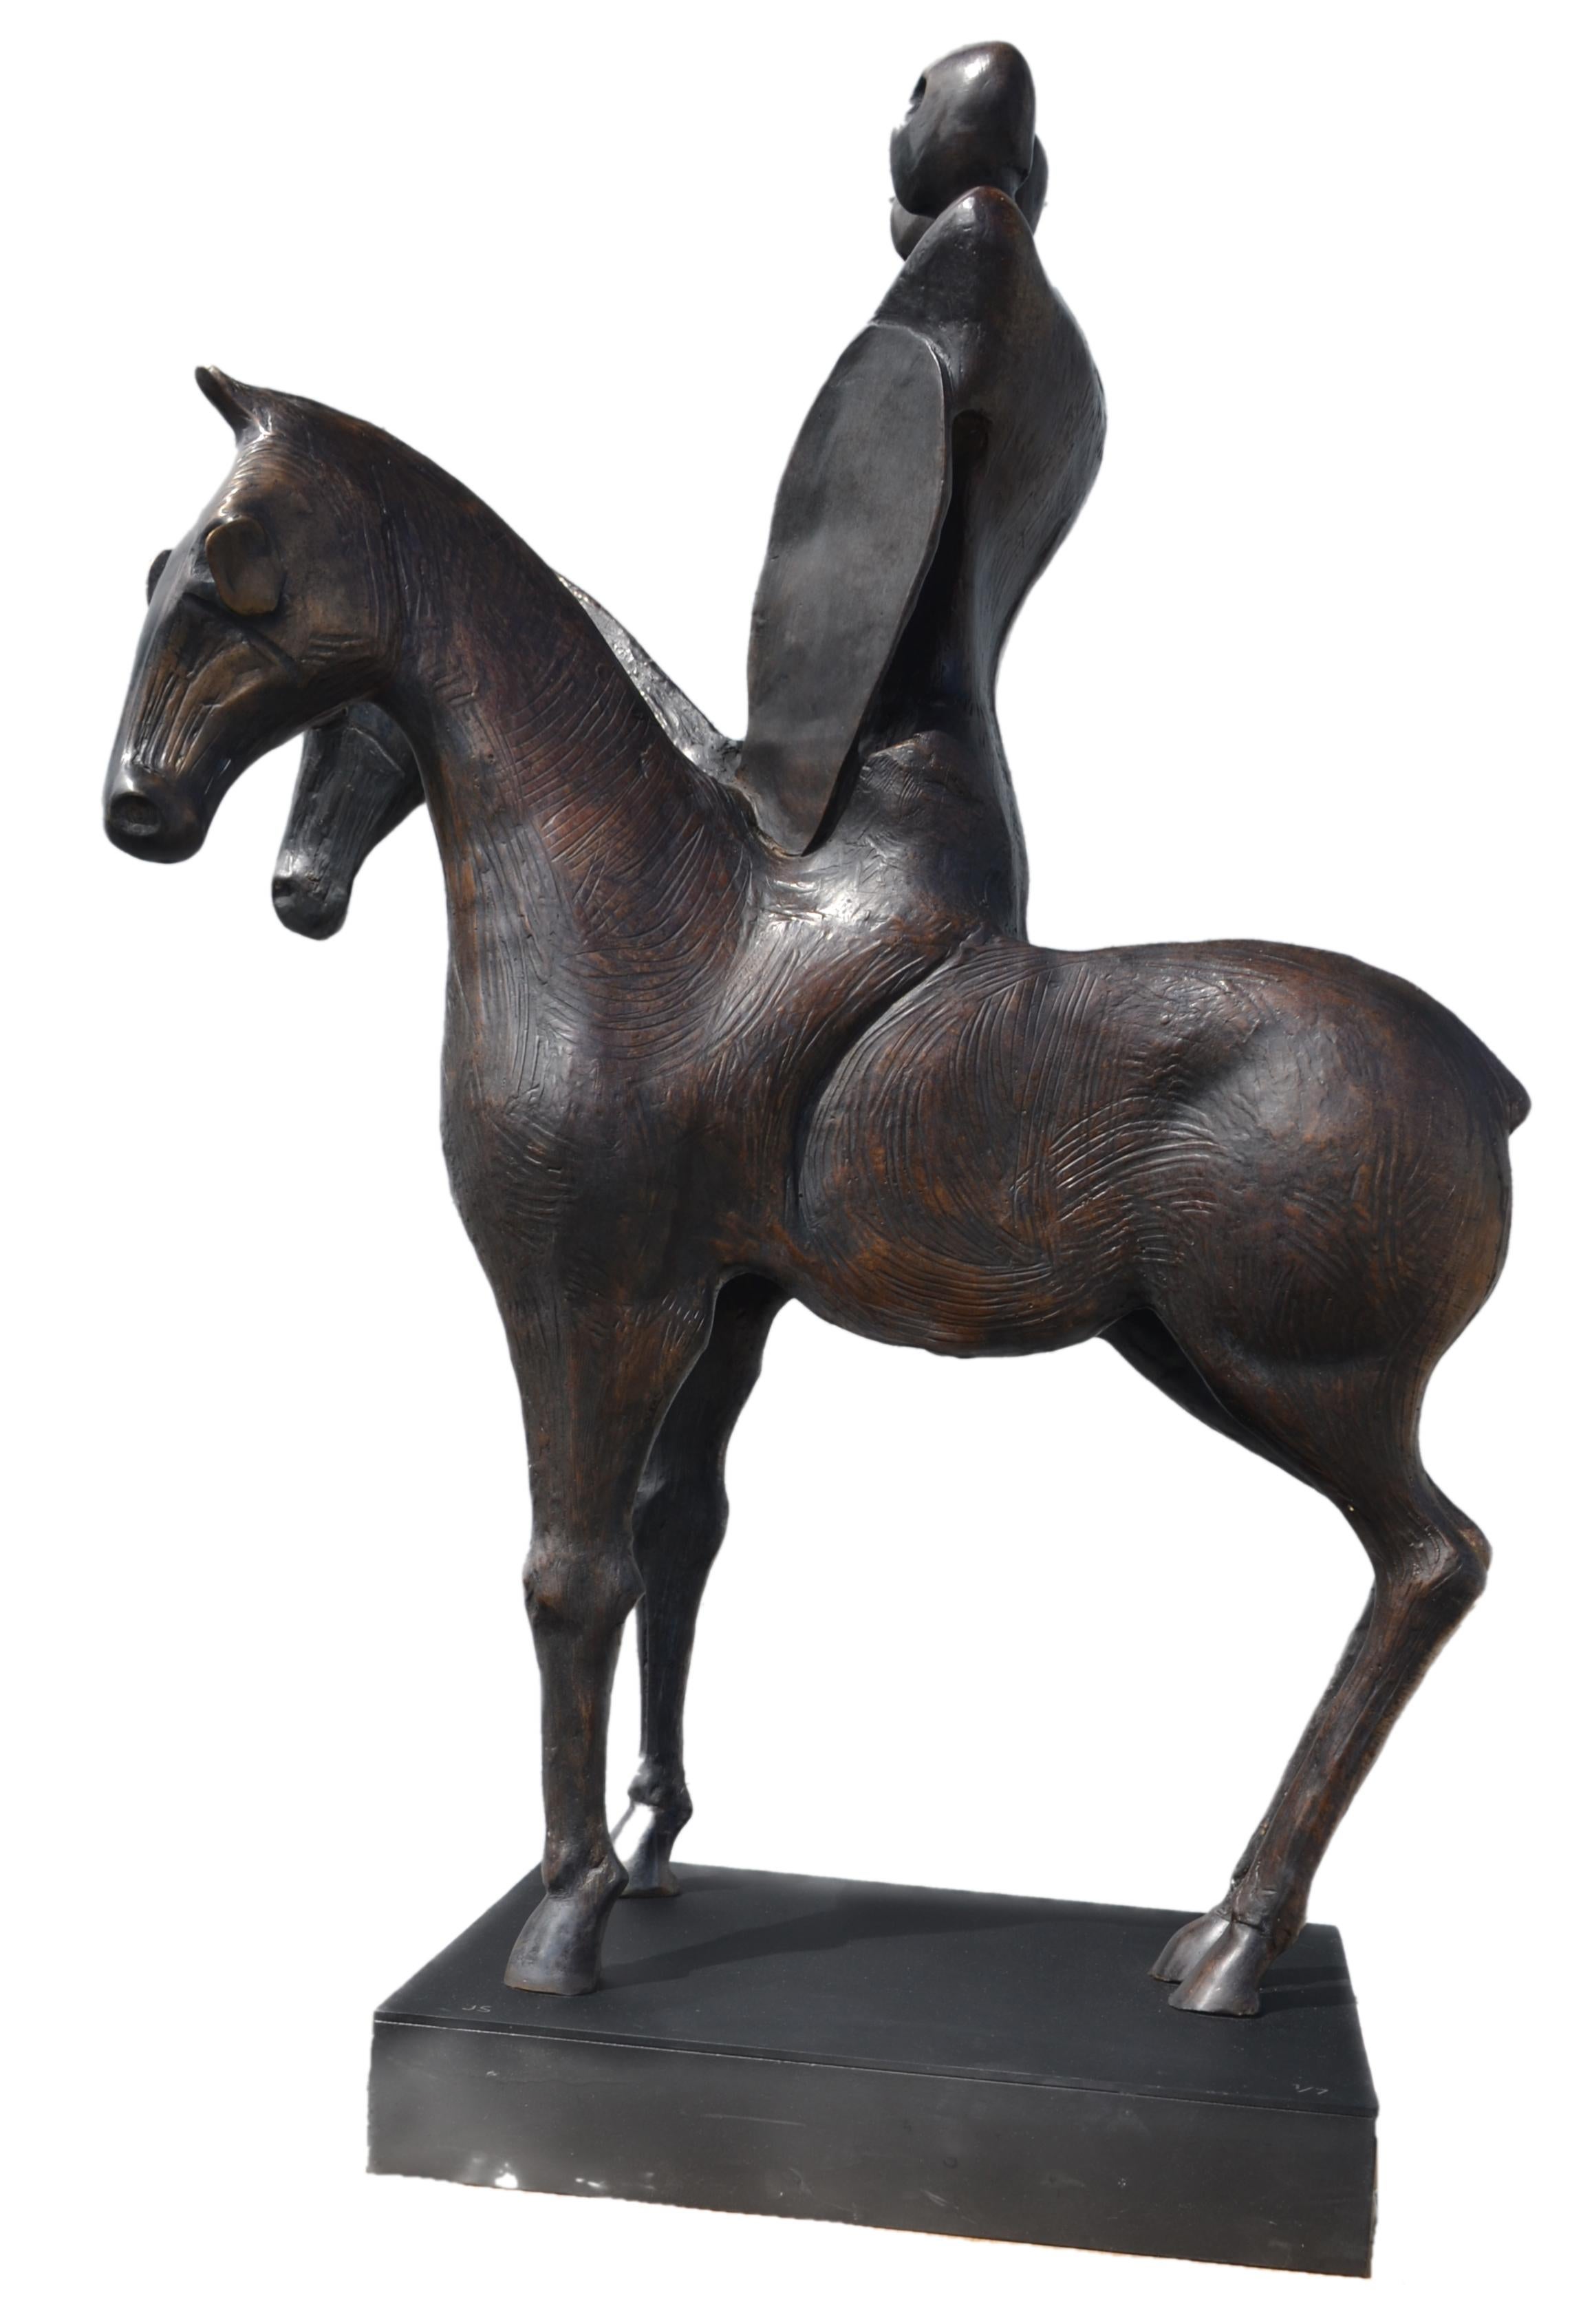 Jorge Segu, Falsos Heroes en Caballos Mticos, bronze, édition 1/7, 2010-2013 - Sculpture de Jorge Seguí 